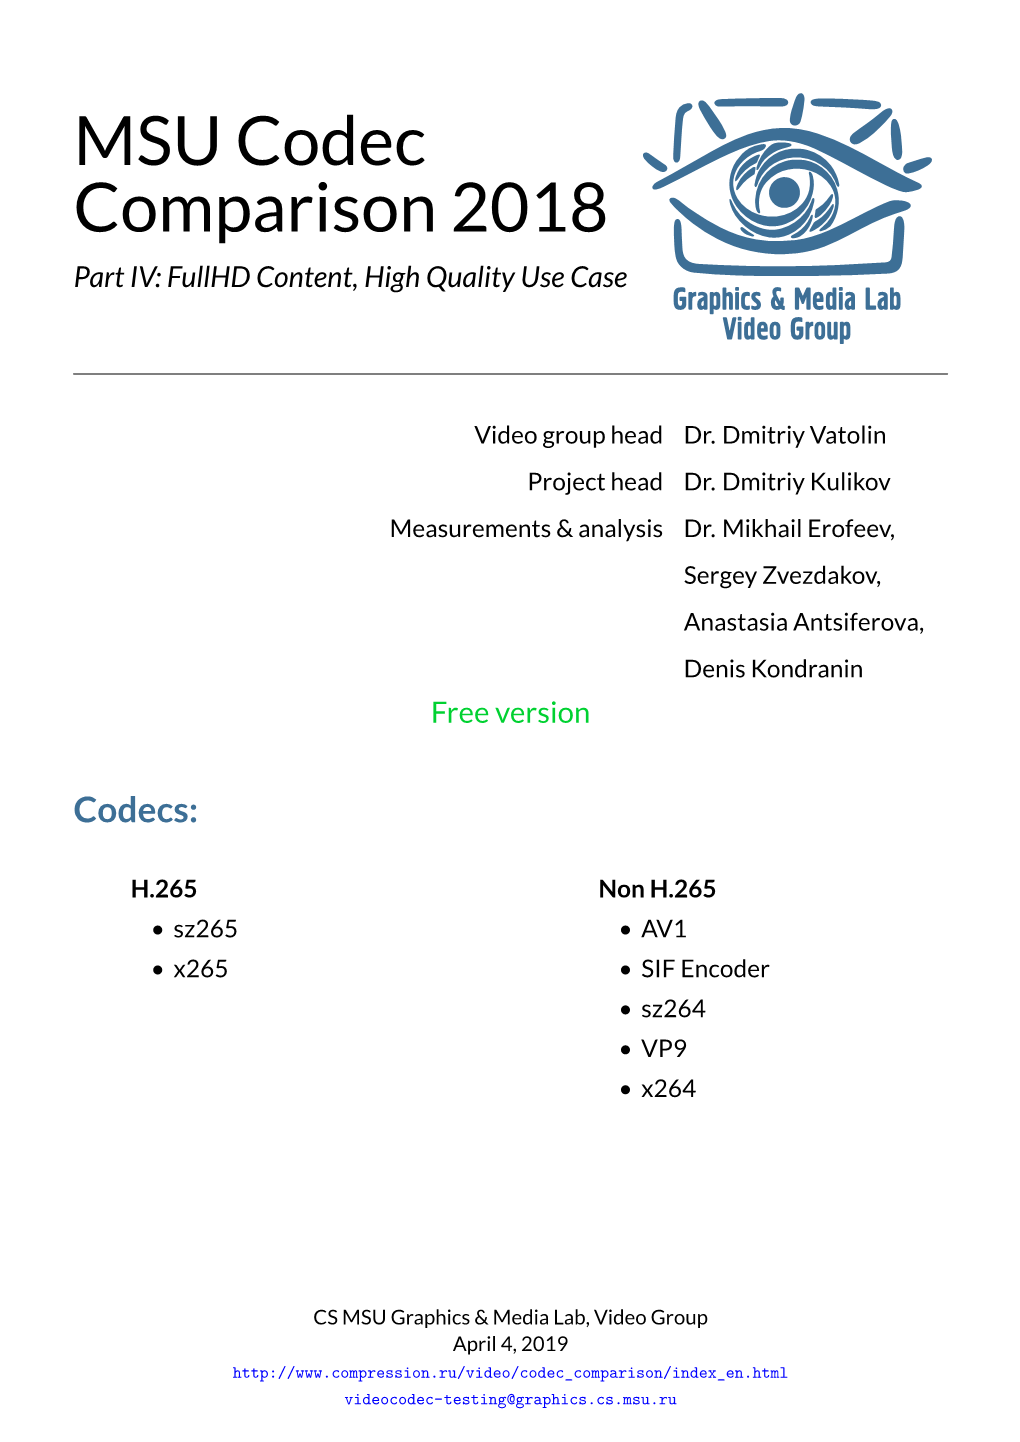 MSU Codec Comparison 2018 Part IV: Fullhd Content, High Quality Use Case